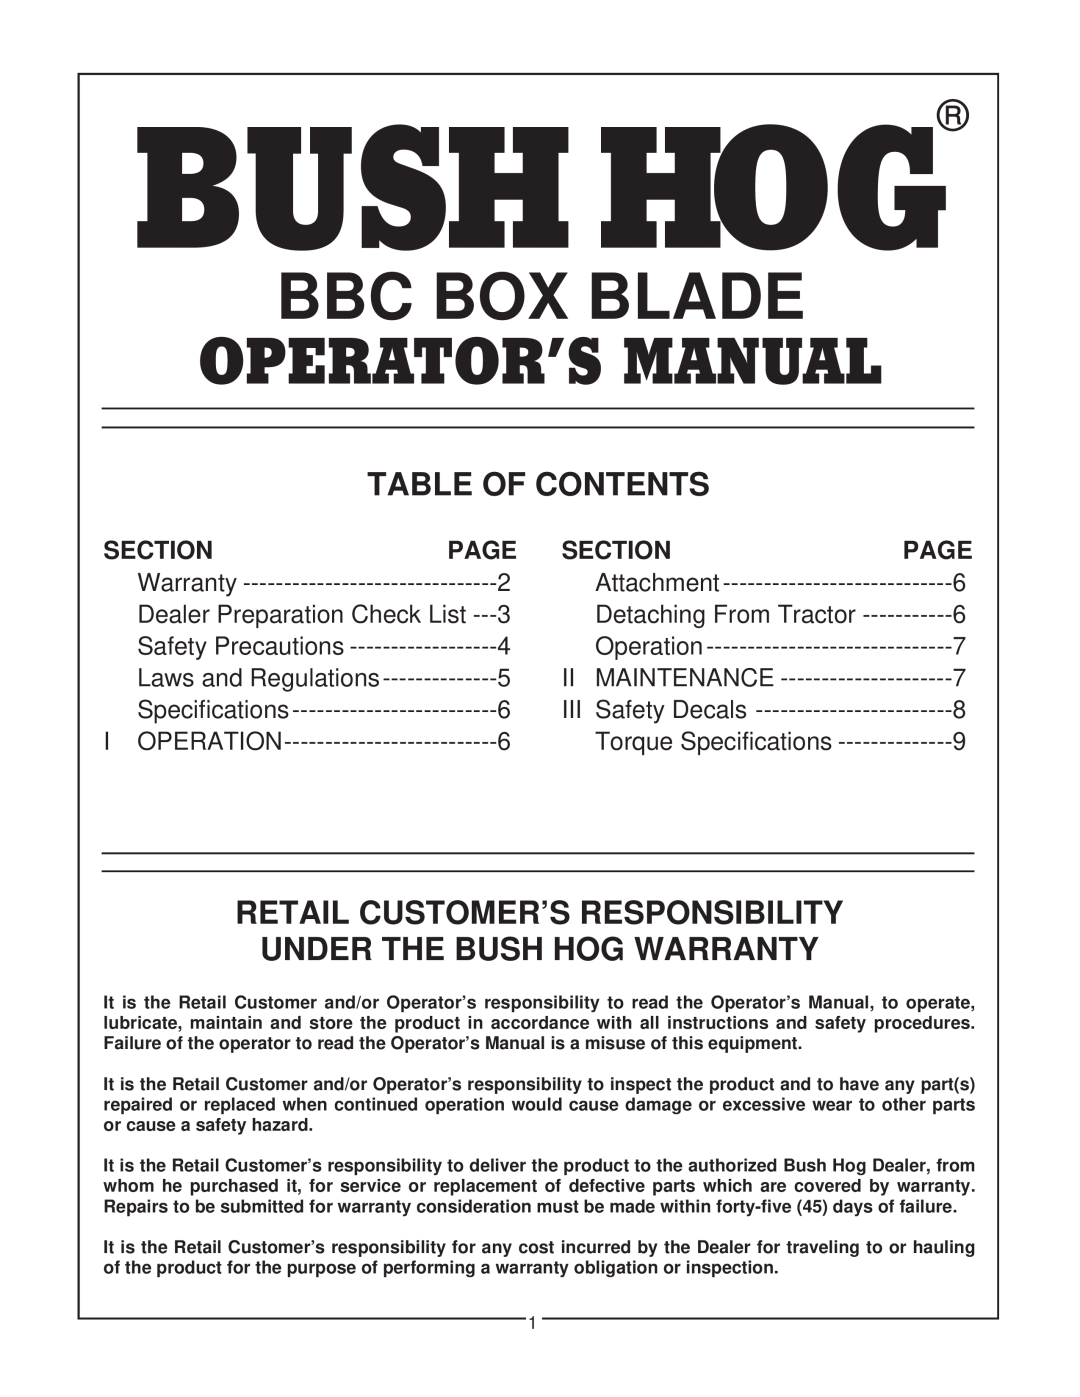 Bush Hog BBC 48 Table Of Contents, Retail Customer’S Responsibility Under The Bush Hog Warranty, Bbc Box Blade, Section 